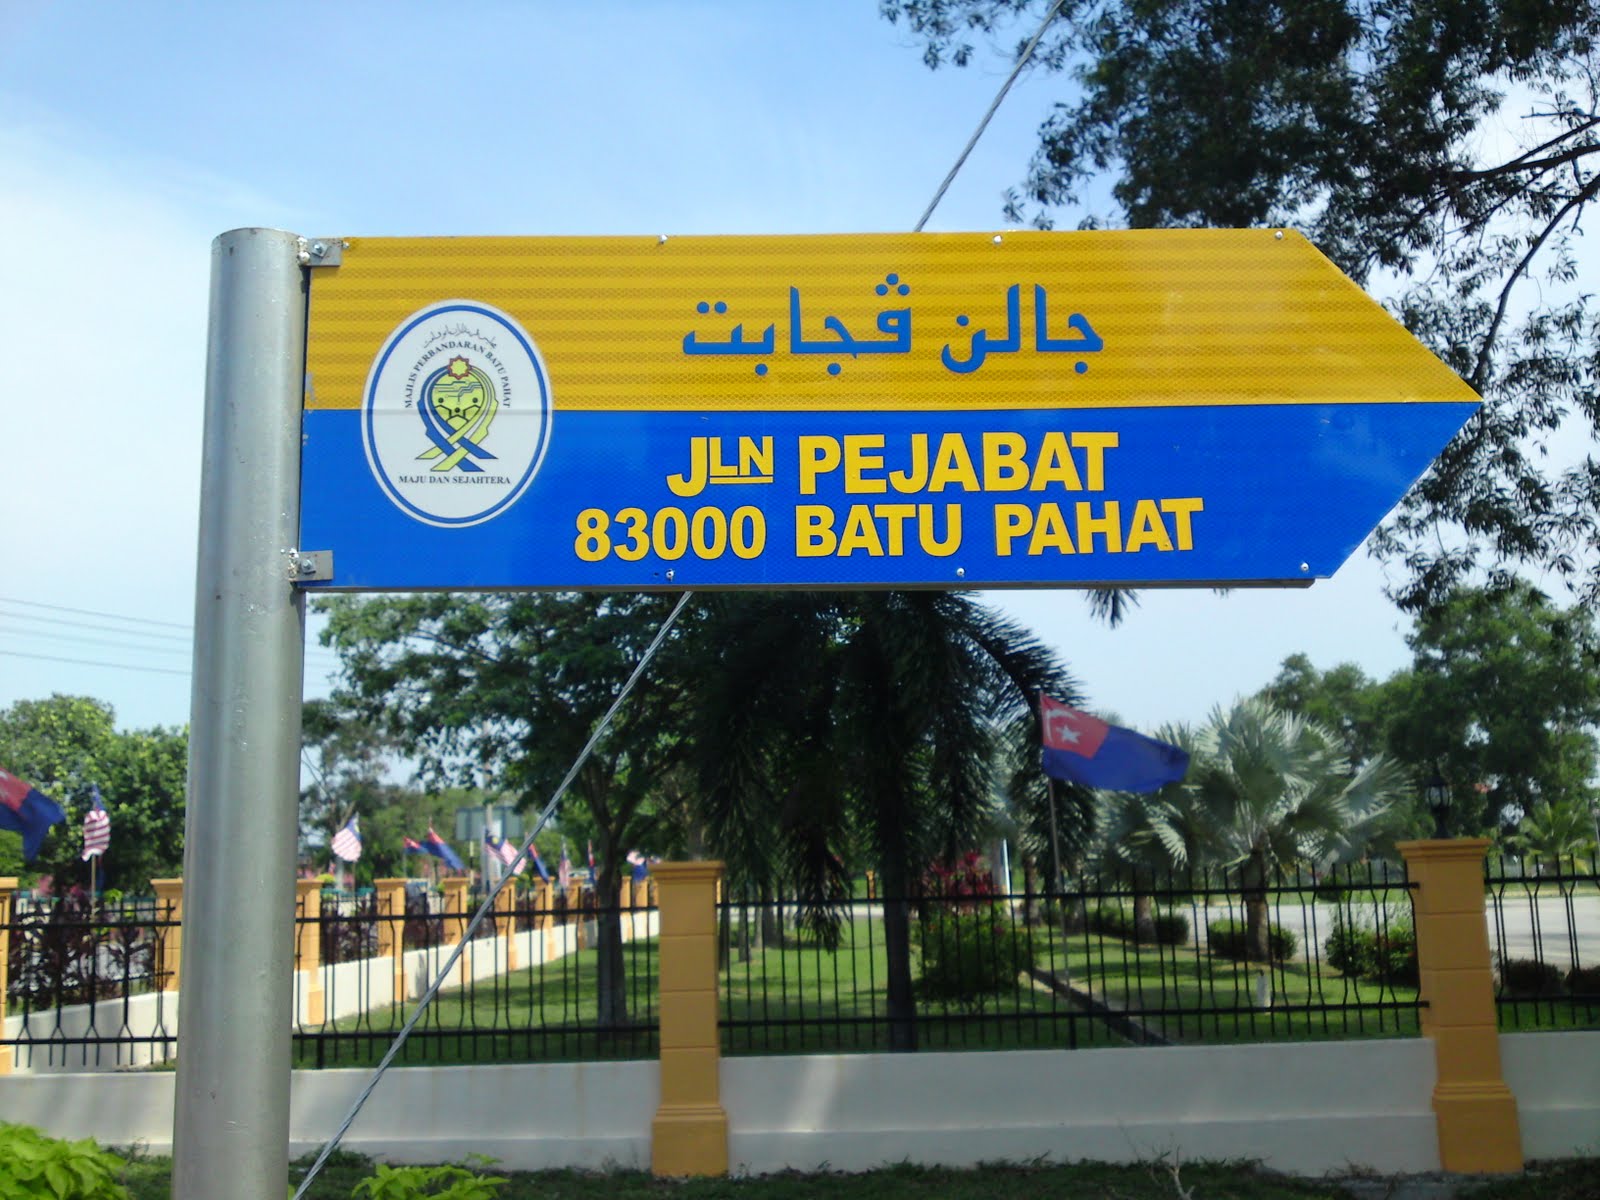 JRC City Hall : If Batu Pahat have the MULTI-LANGUANGE SIGNBOARD......